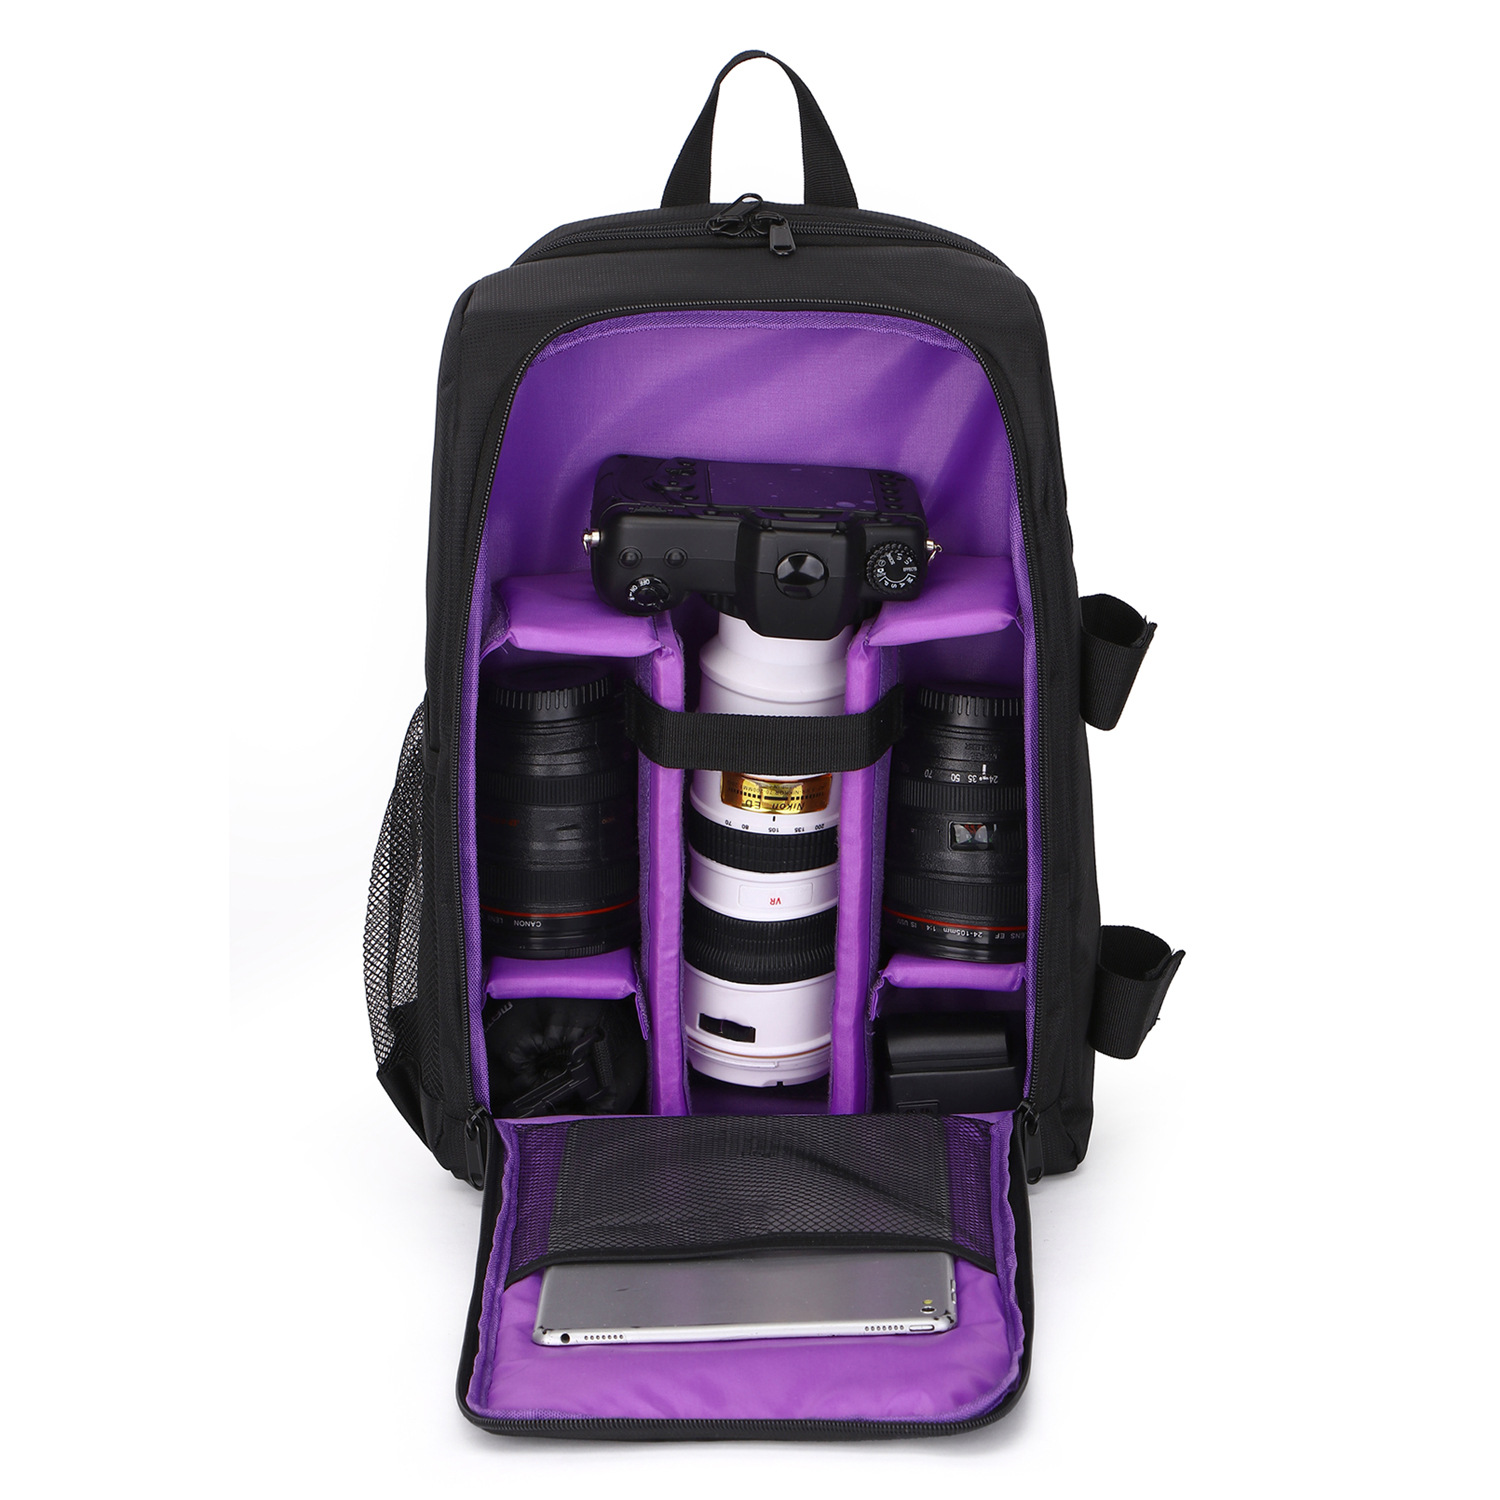 SYNTEK SLR Outdoor-Fotografie Digitalkamera Tasche lila Tasche wasserdicht tragen Schultern Kameratasche, Rucksäcke